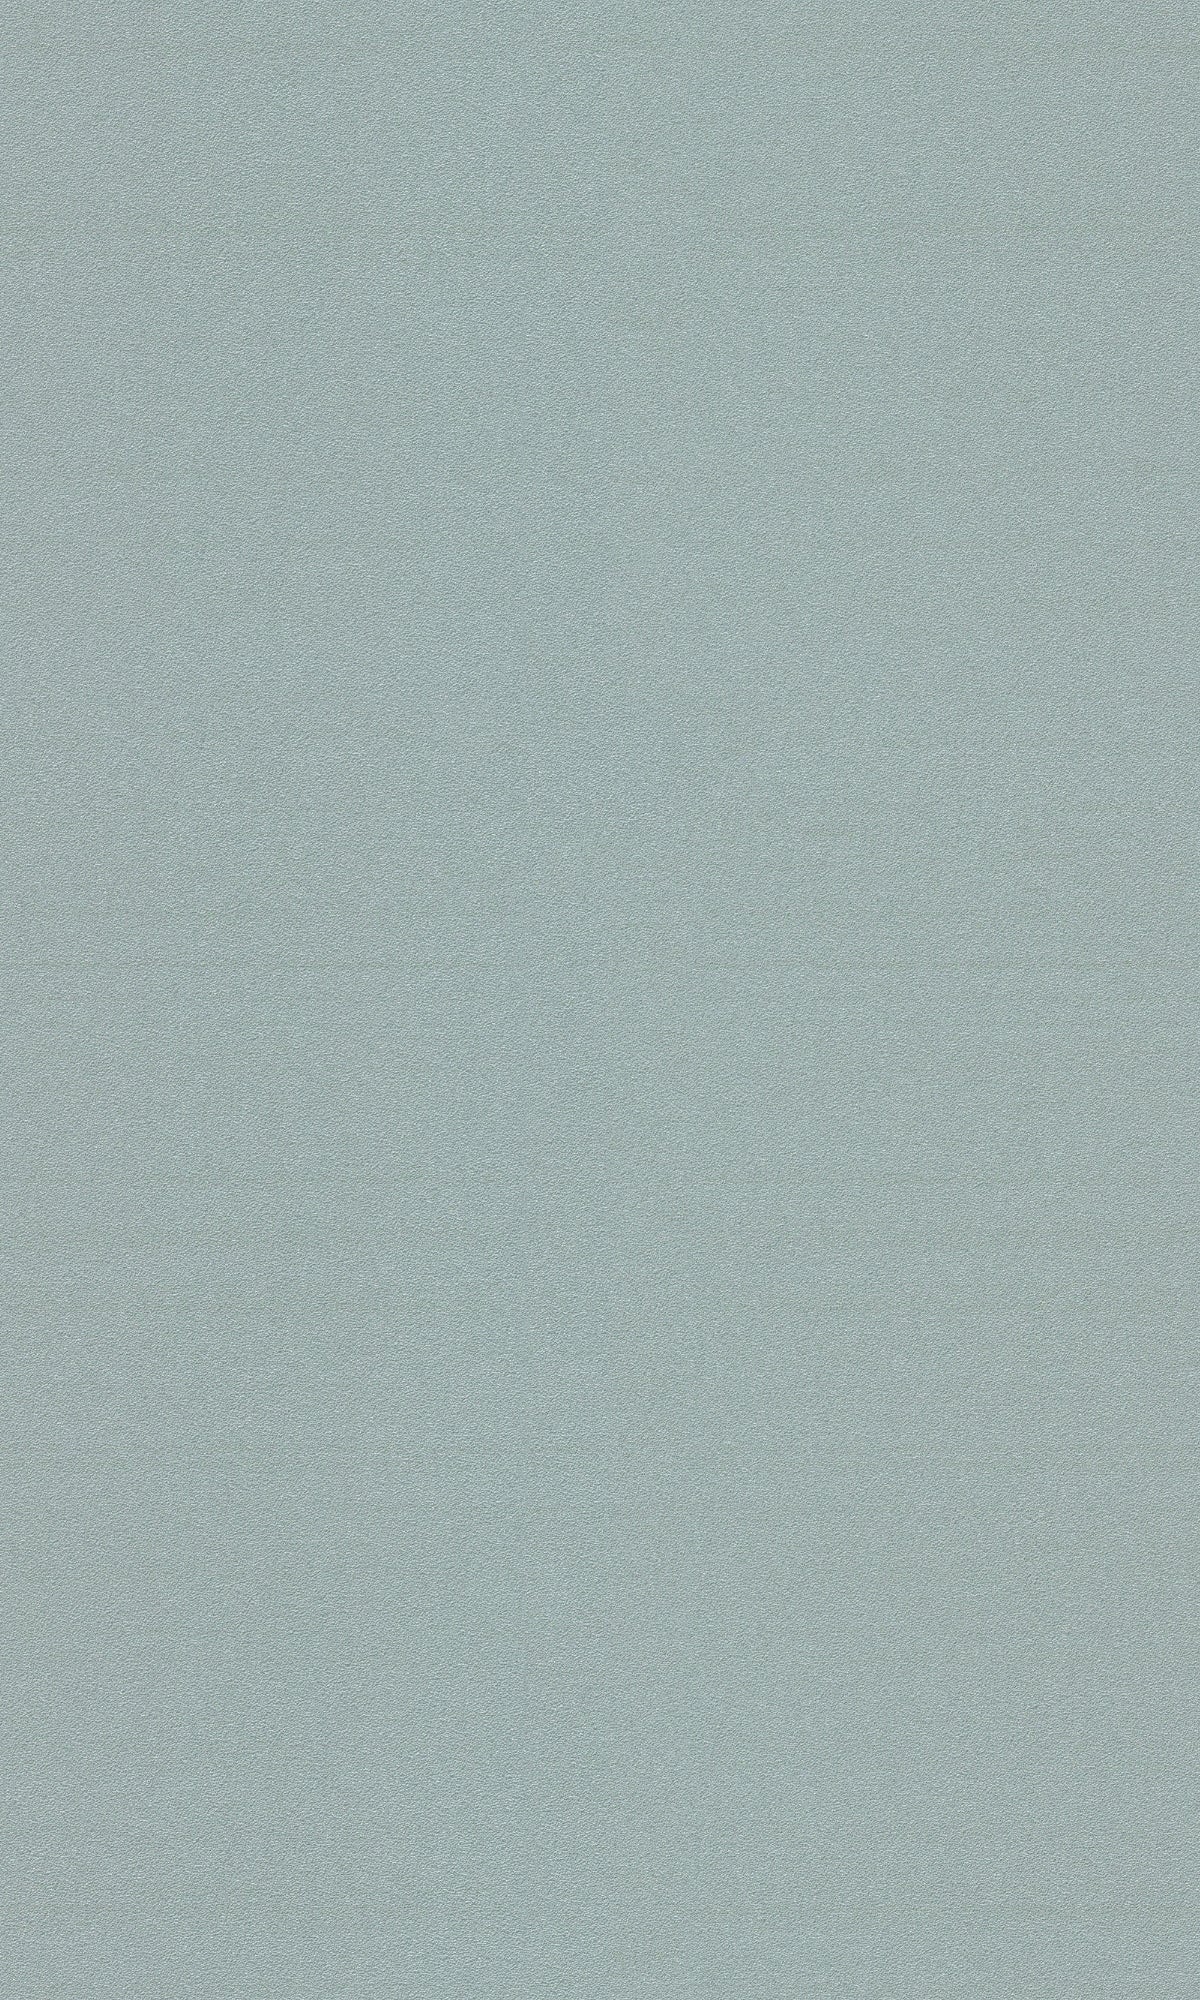 Beige Plain Textured Wallpaper R8860